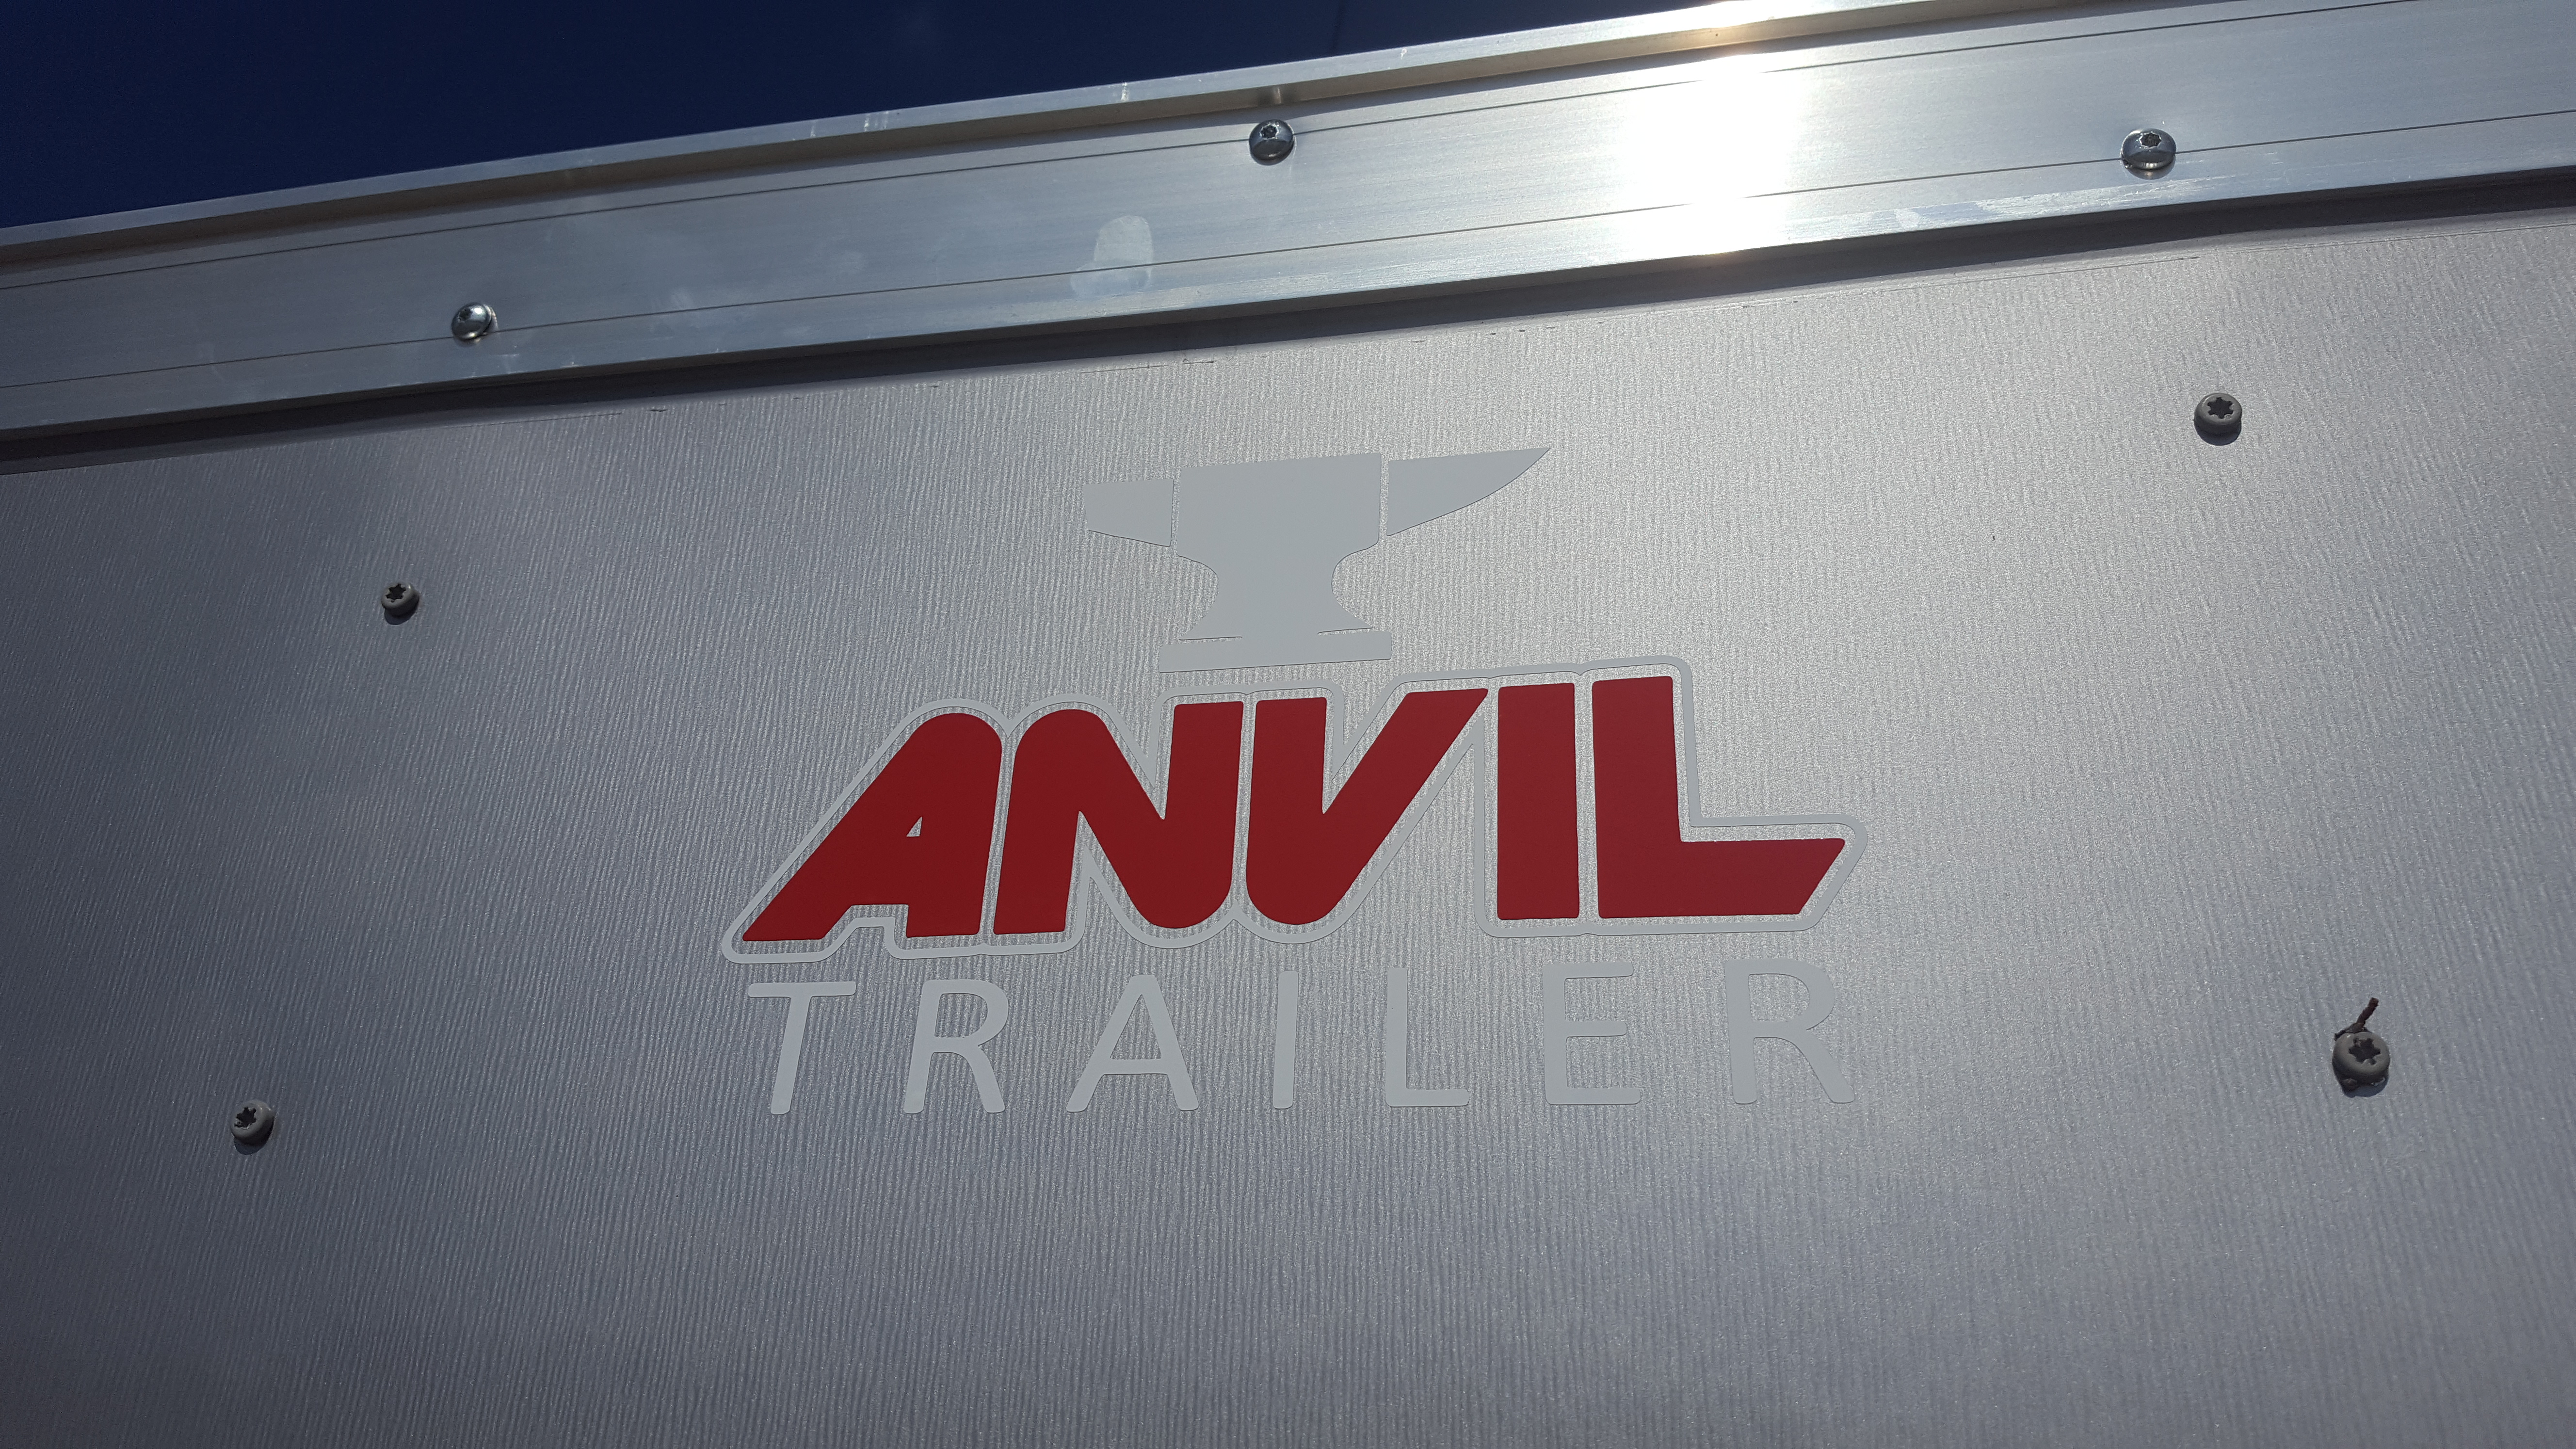 2017 anvil trailer